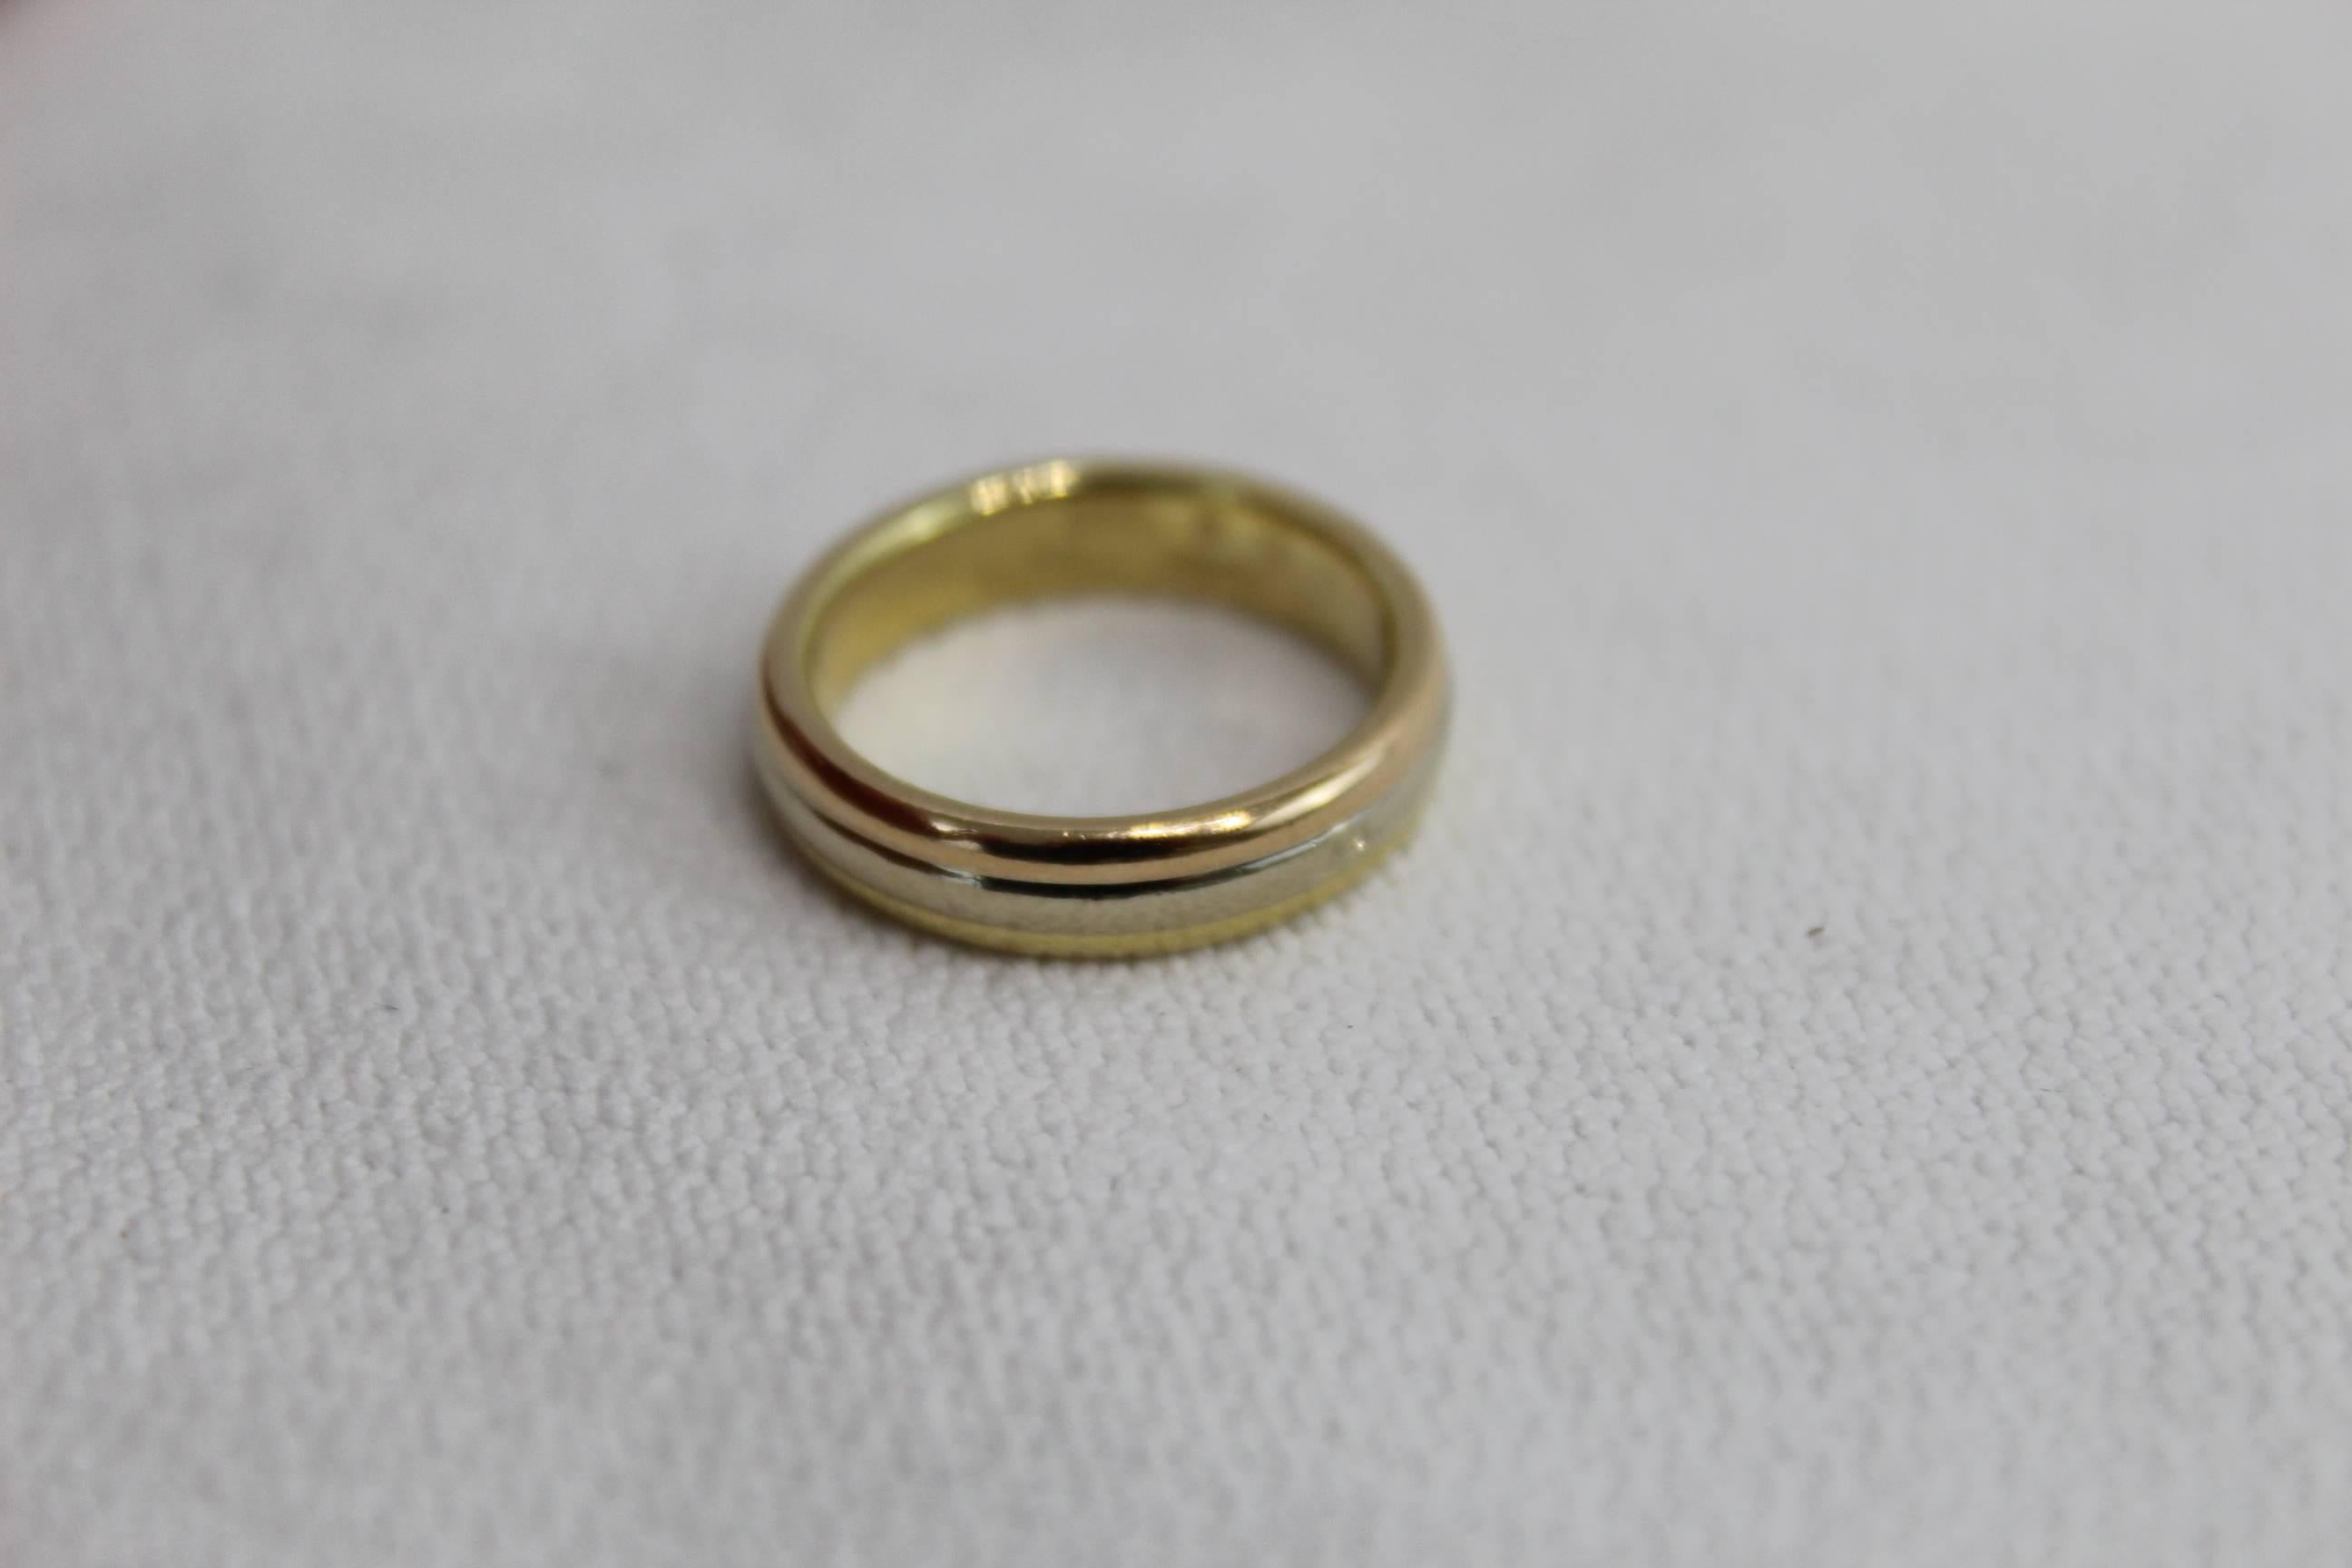 1998 gold ring